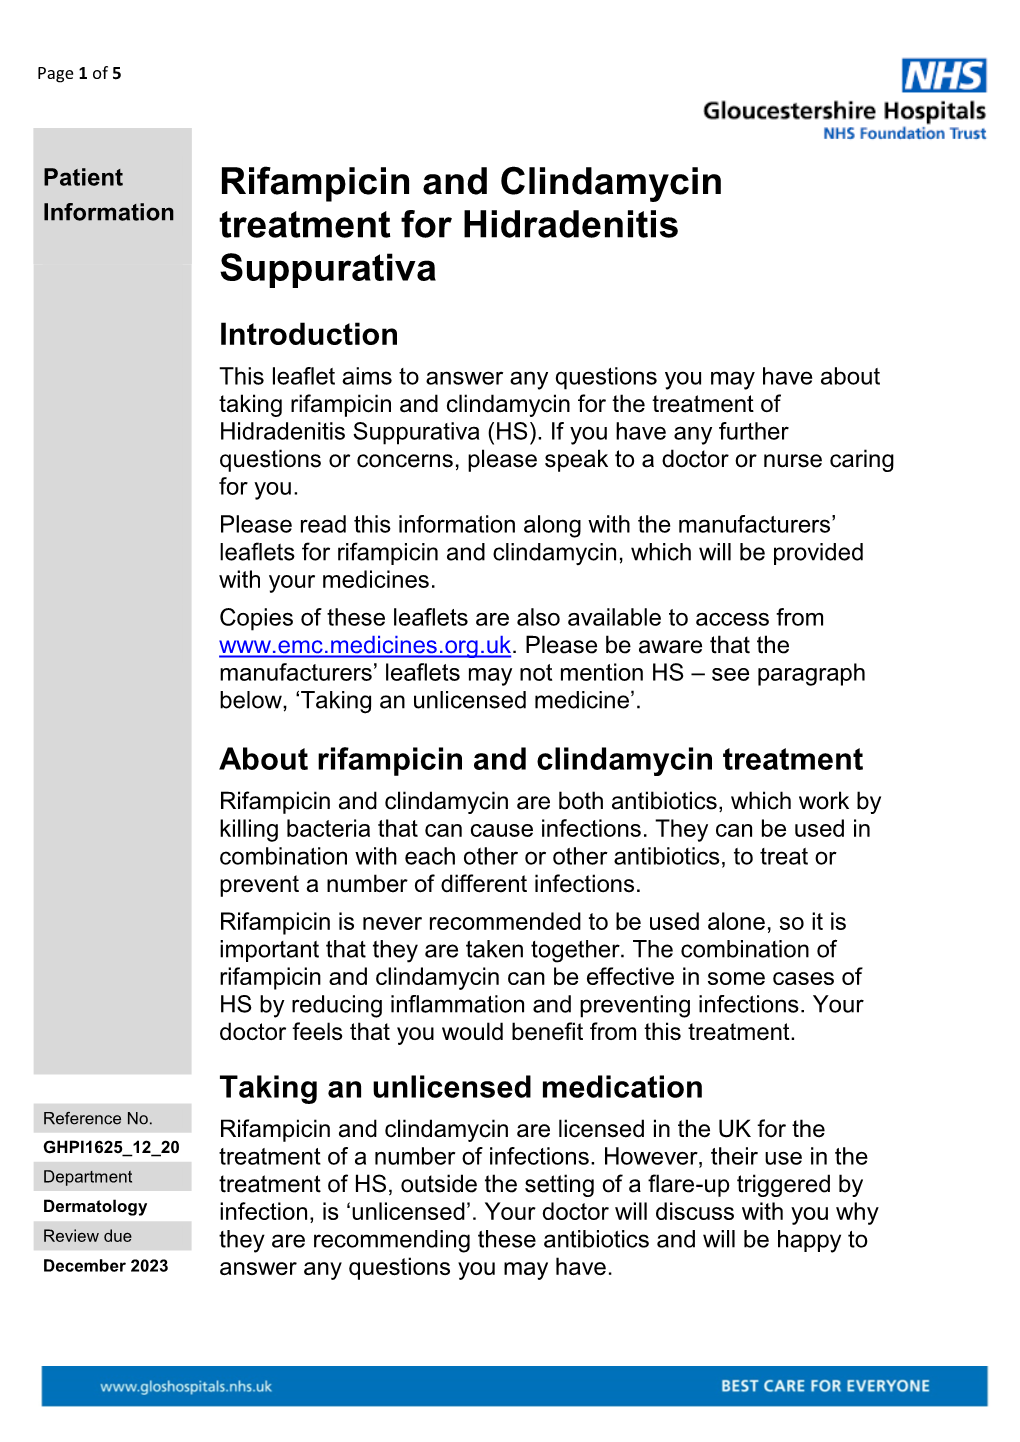 Rifampicin and Clindamycin Treatment for Hidradenitis Suppurativa